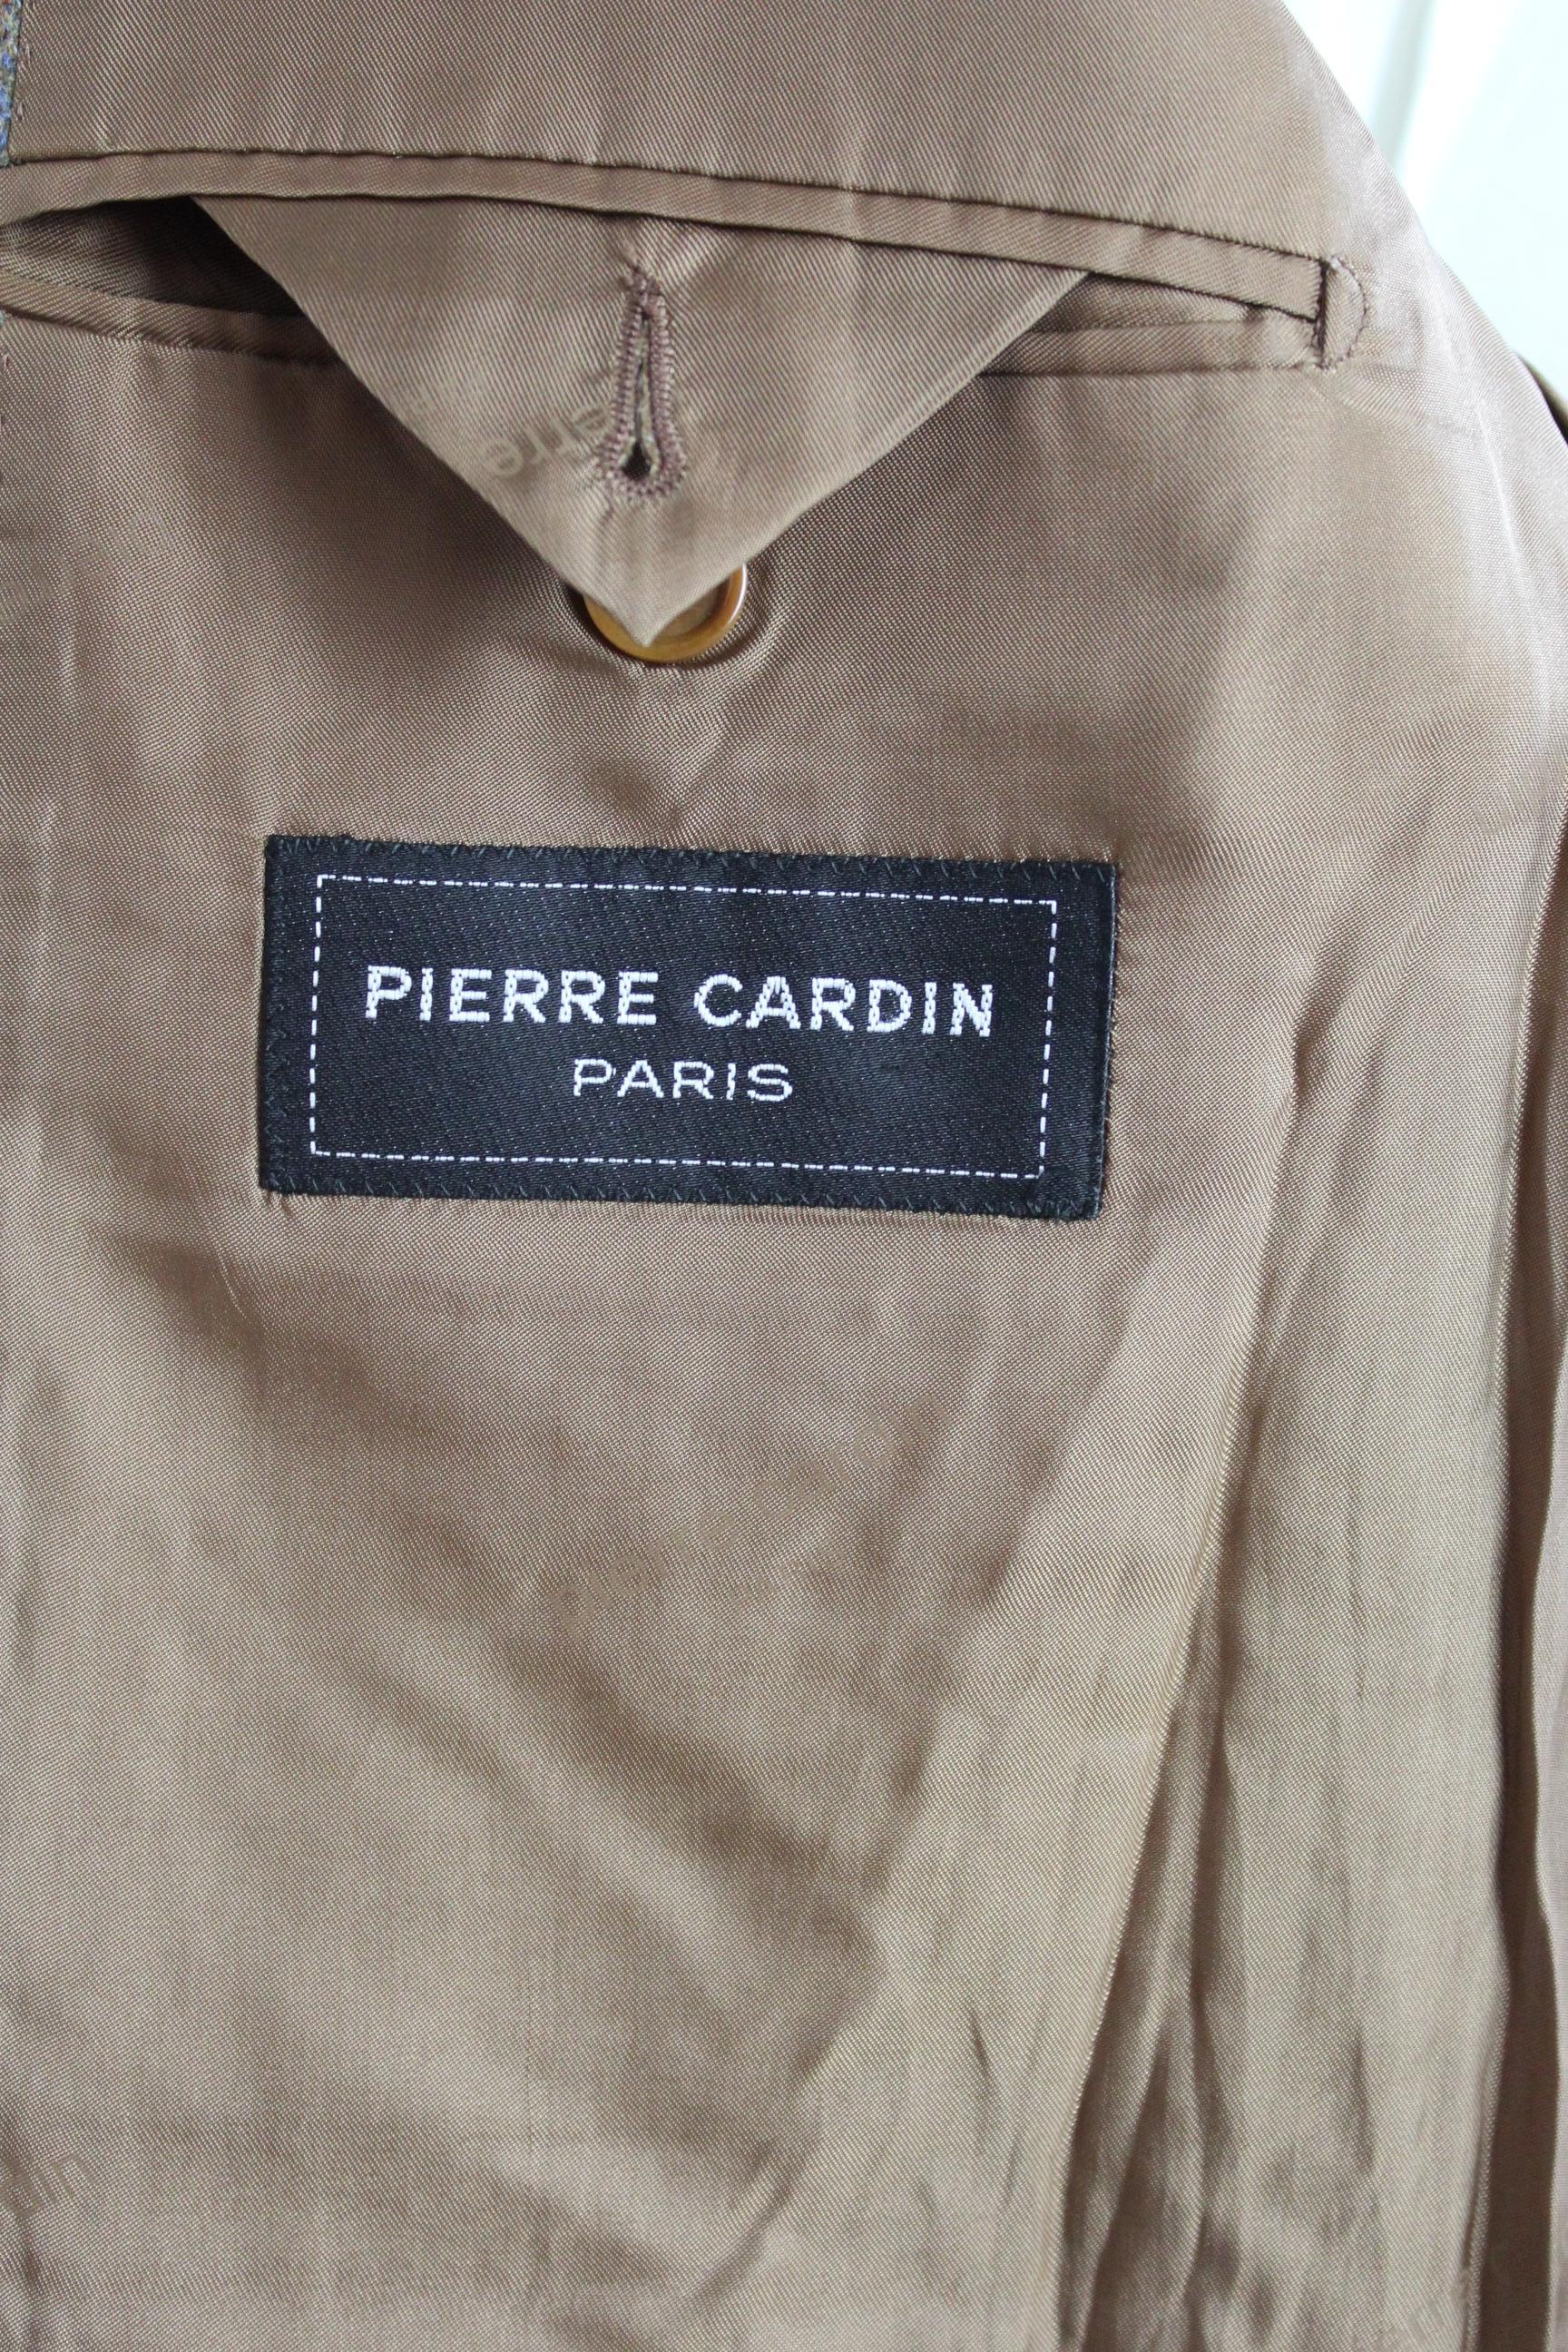 Pierre Cardin Harris Tweed Beige Wool Classic Jacket 1980s 2